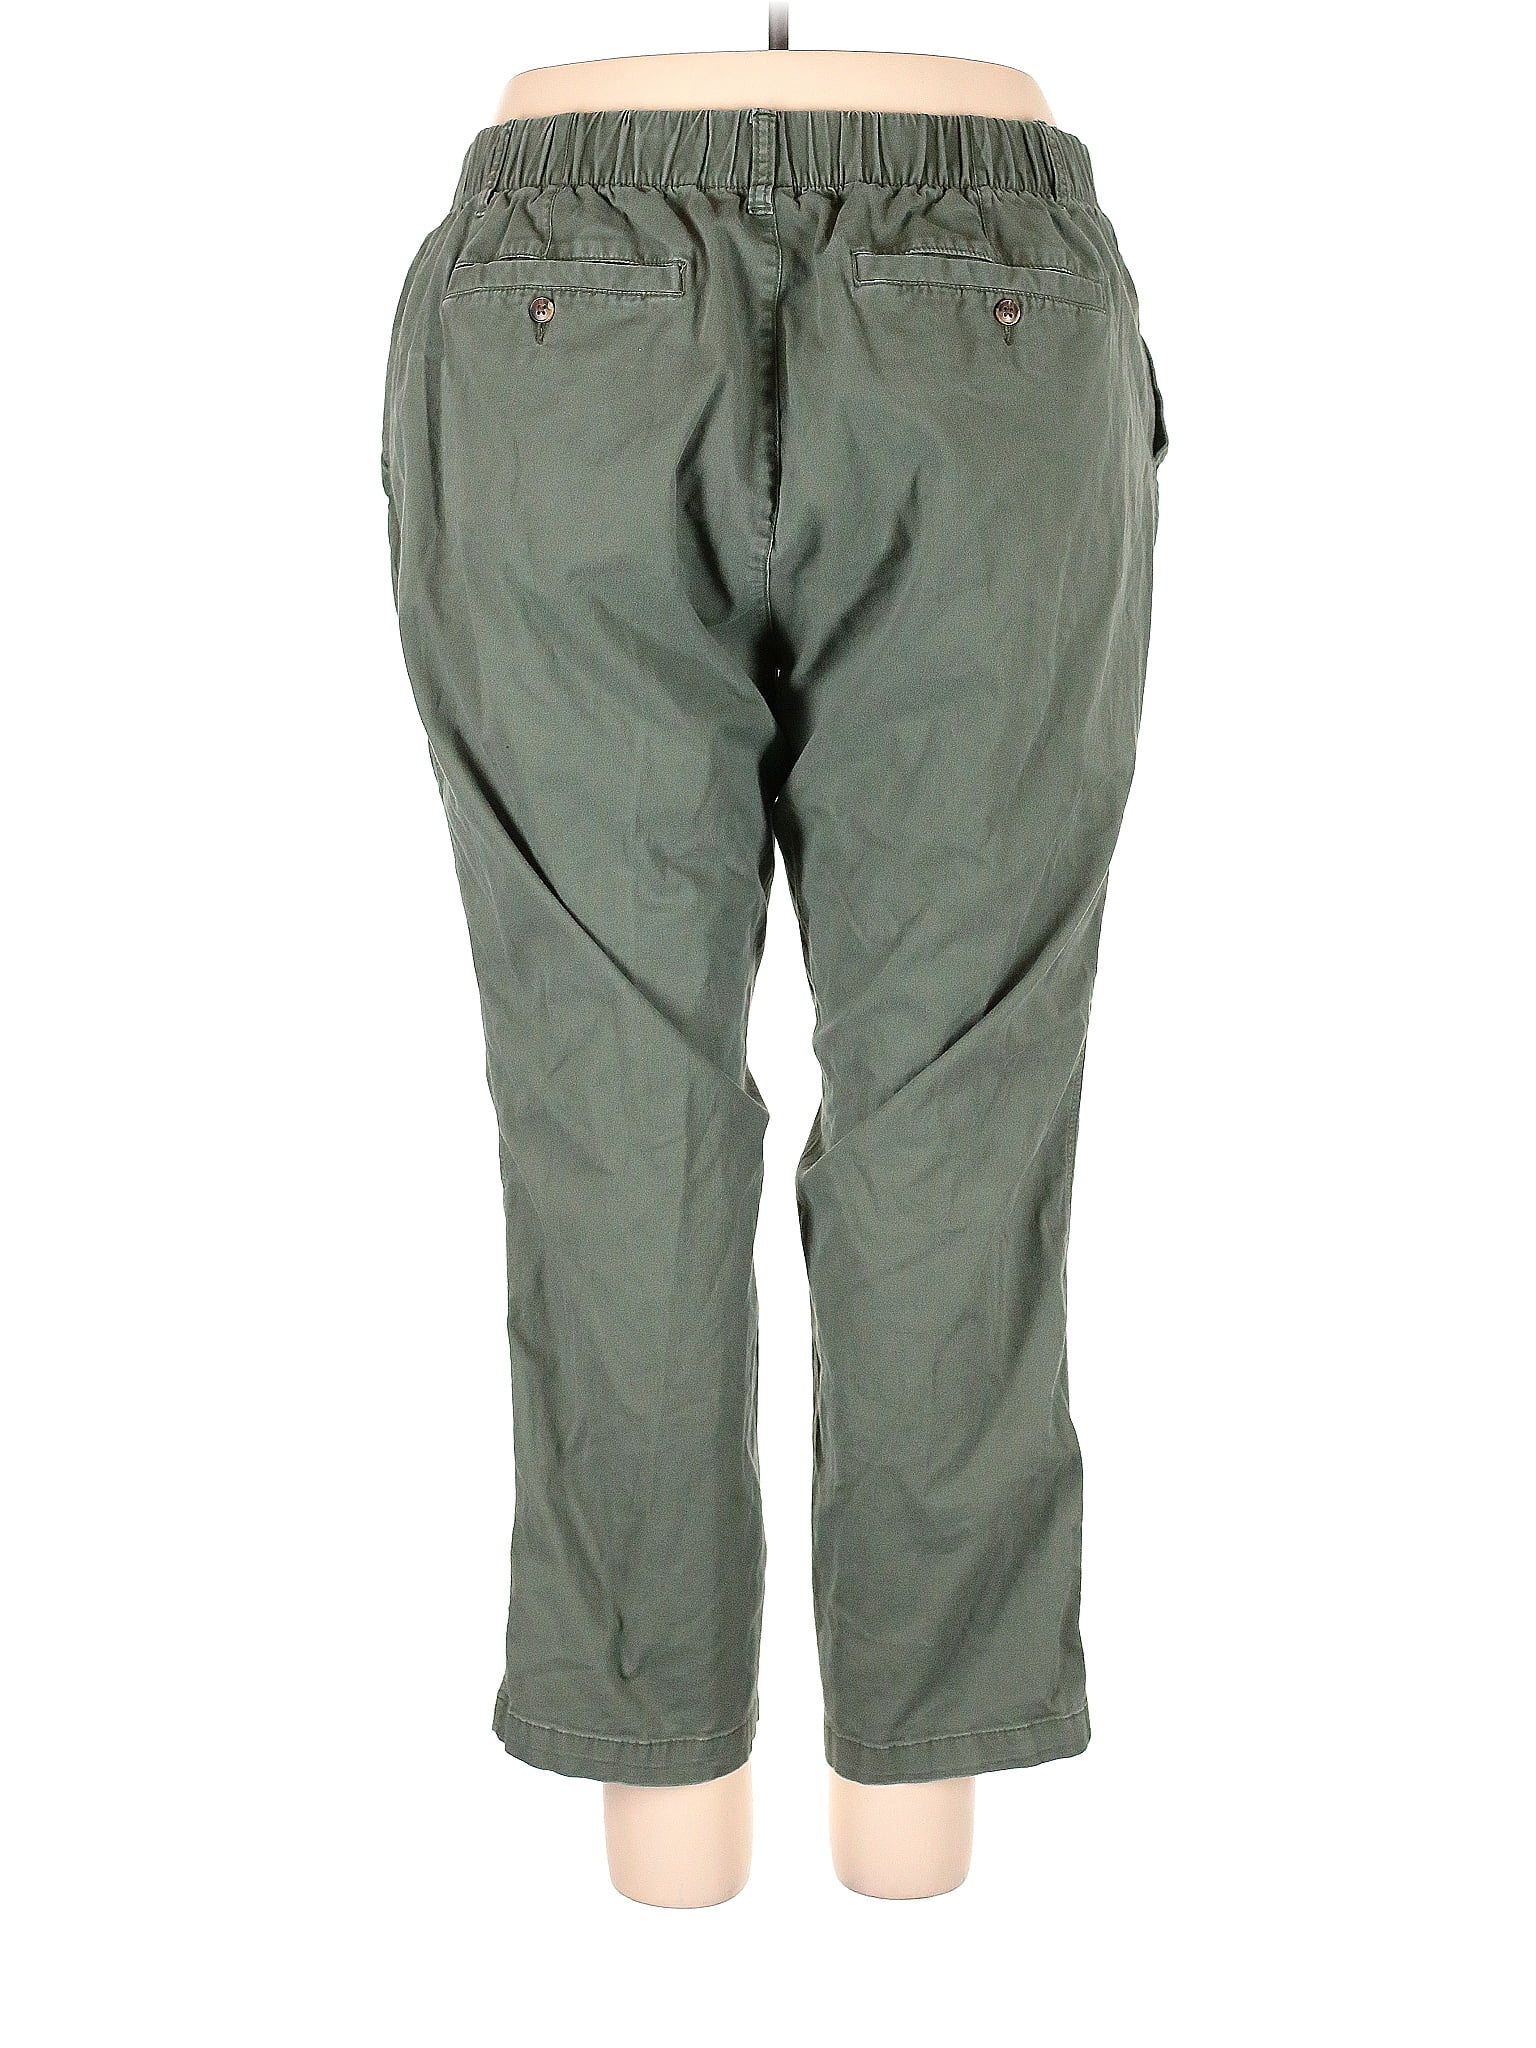 Buffbunny Green Active Pants Size XL - 59% off